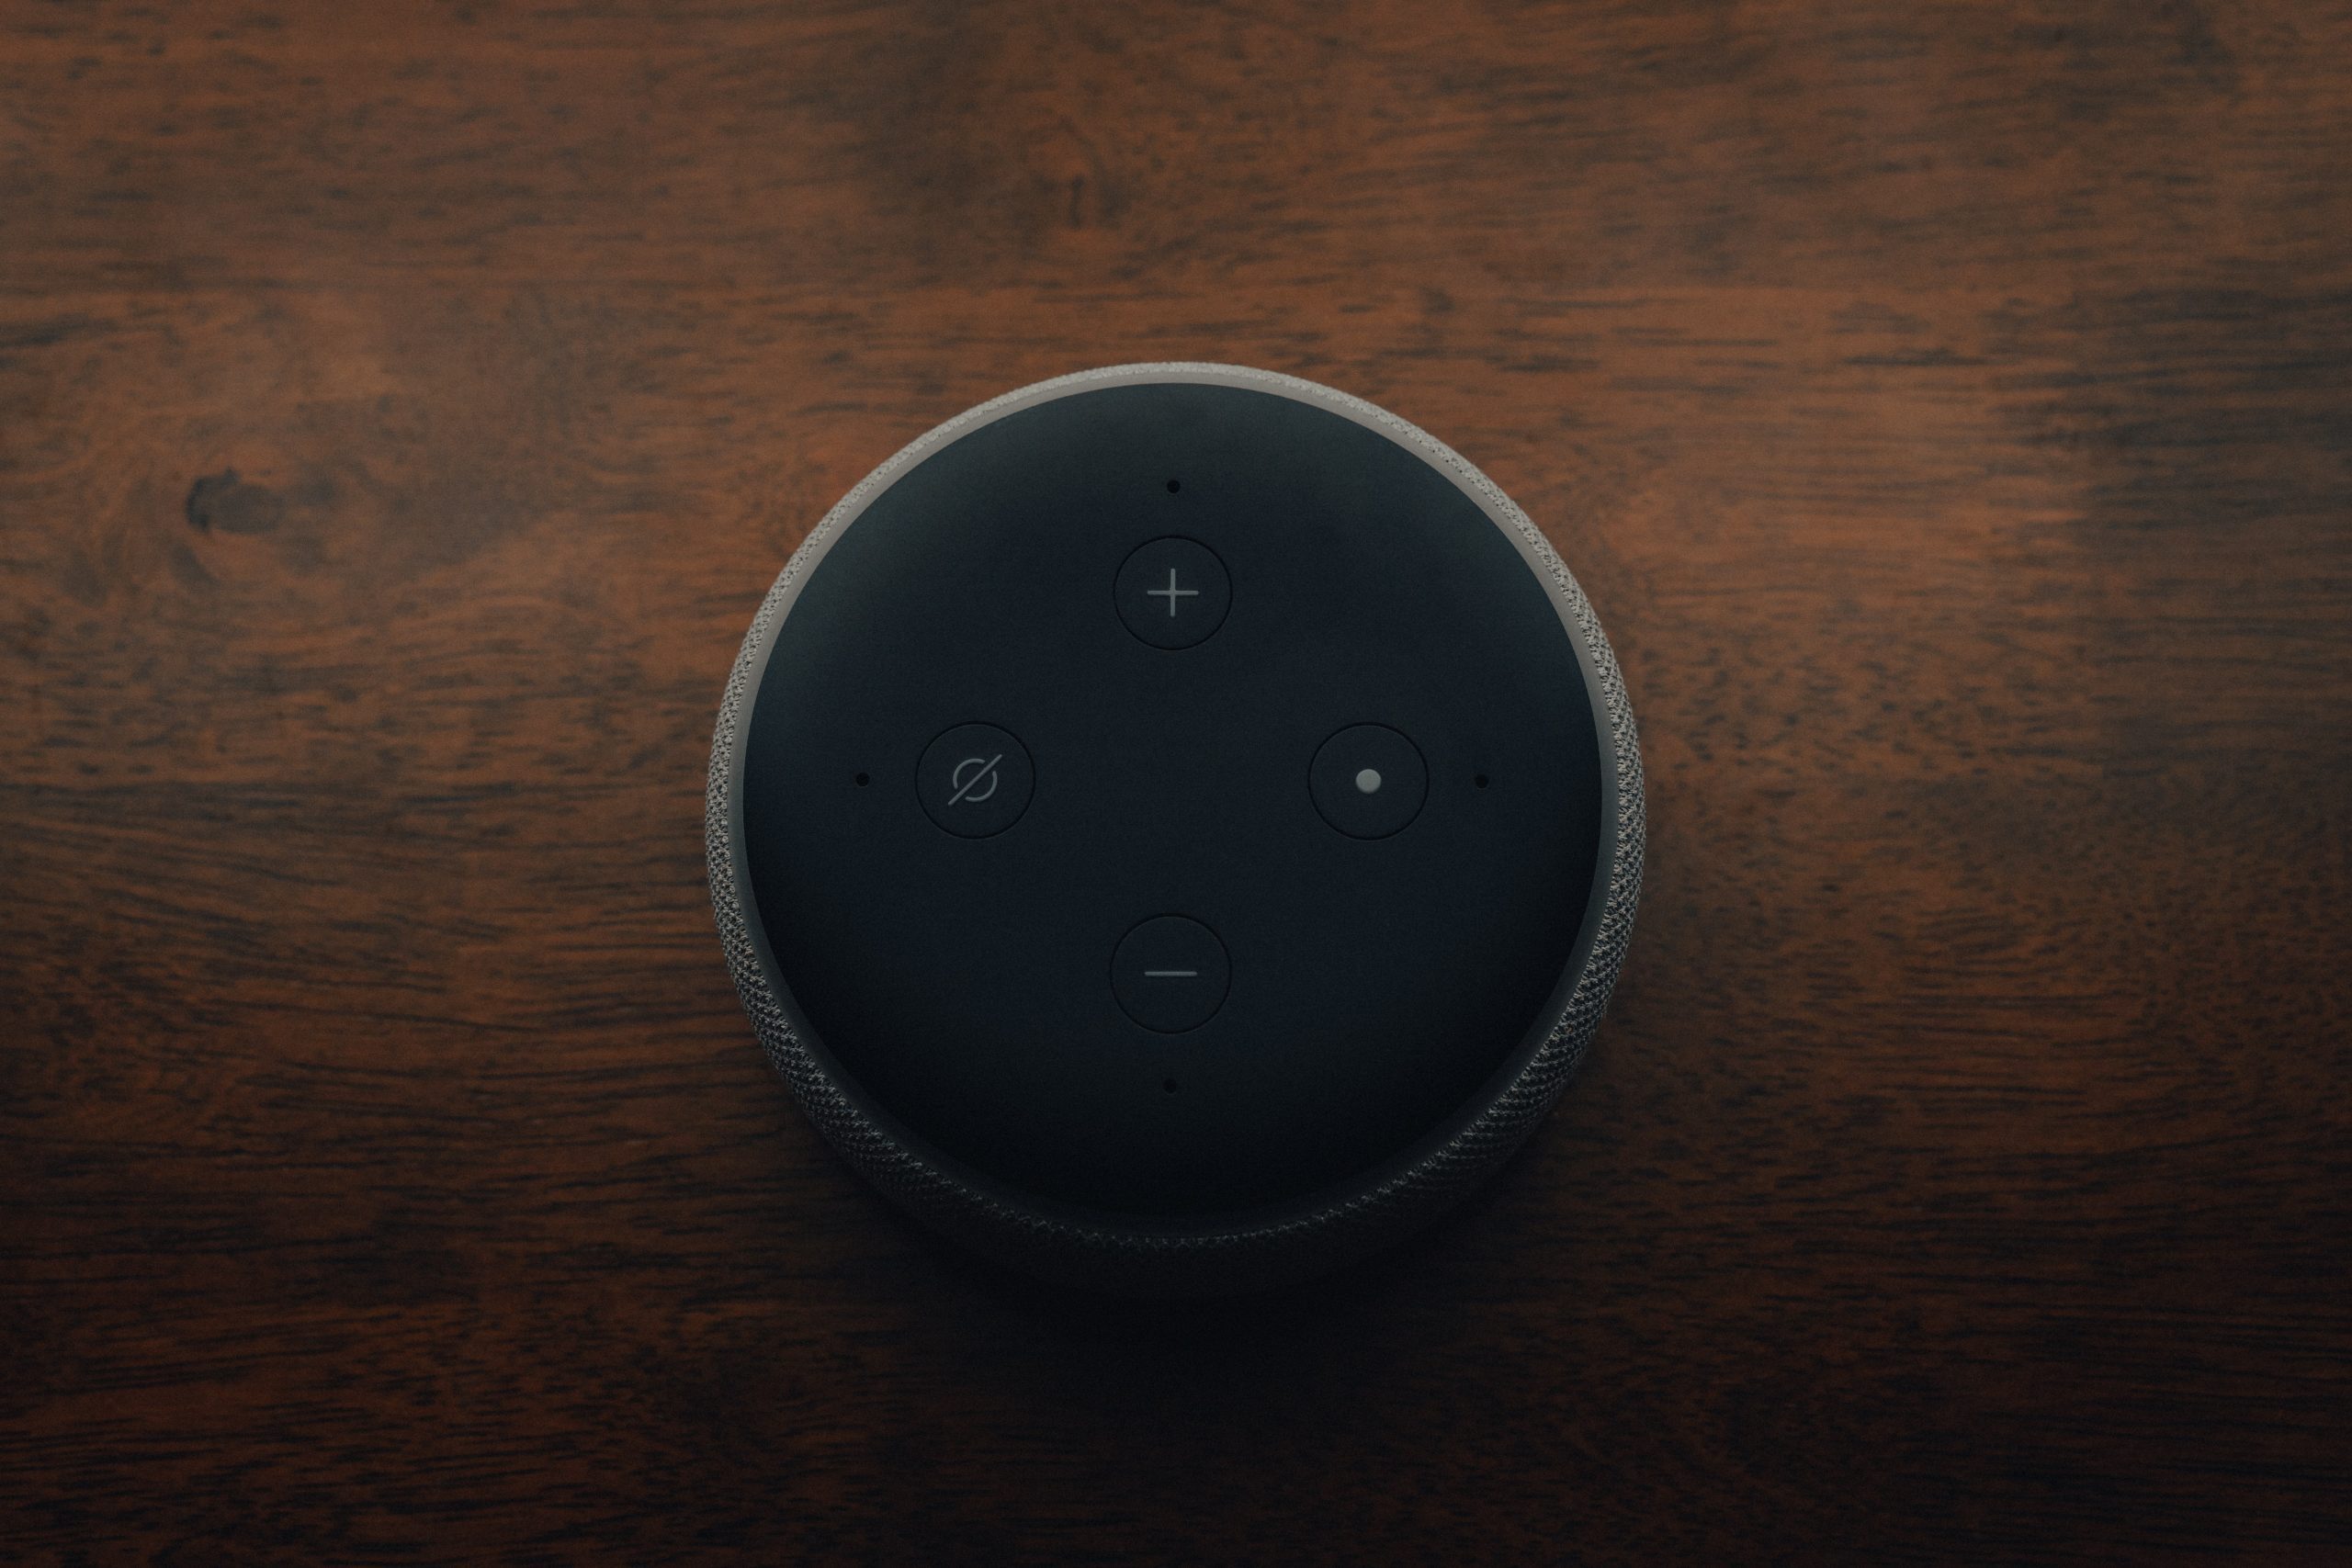 Amazon Echo Dot in black sitting on a dark wood table